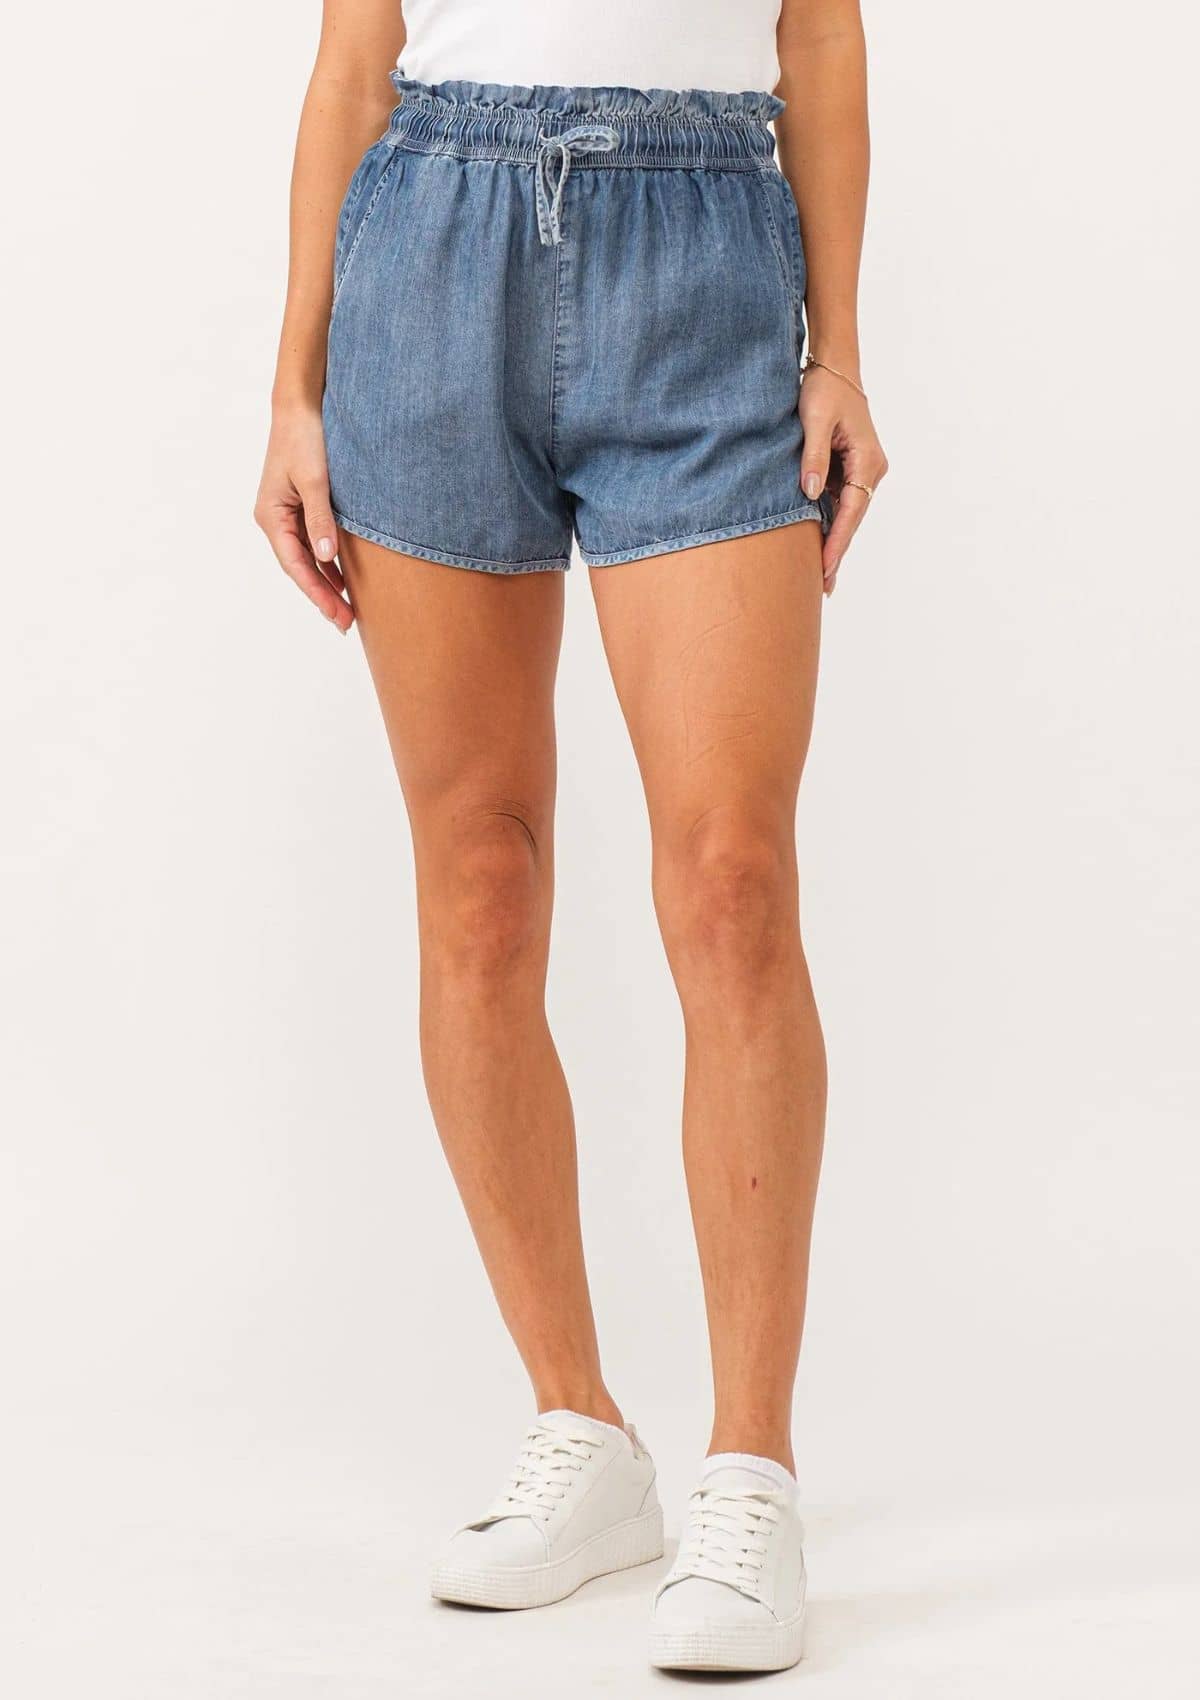 clothing-Fashion-denim shorts-Ruby Jane.